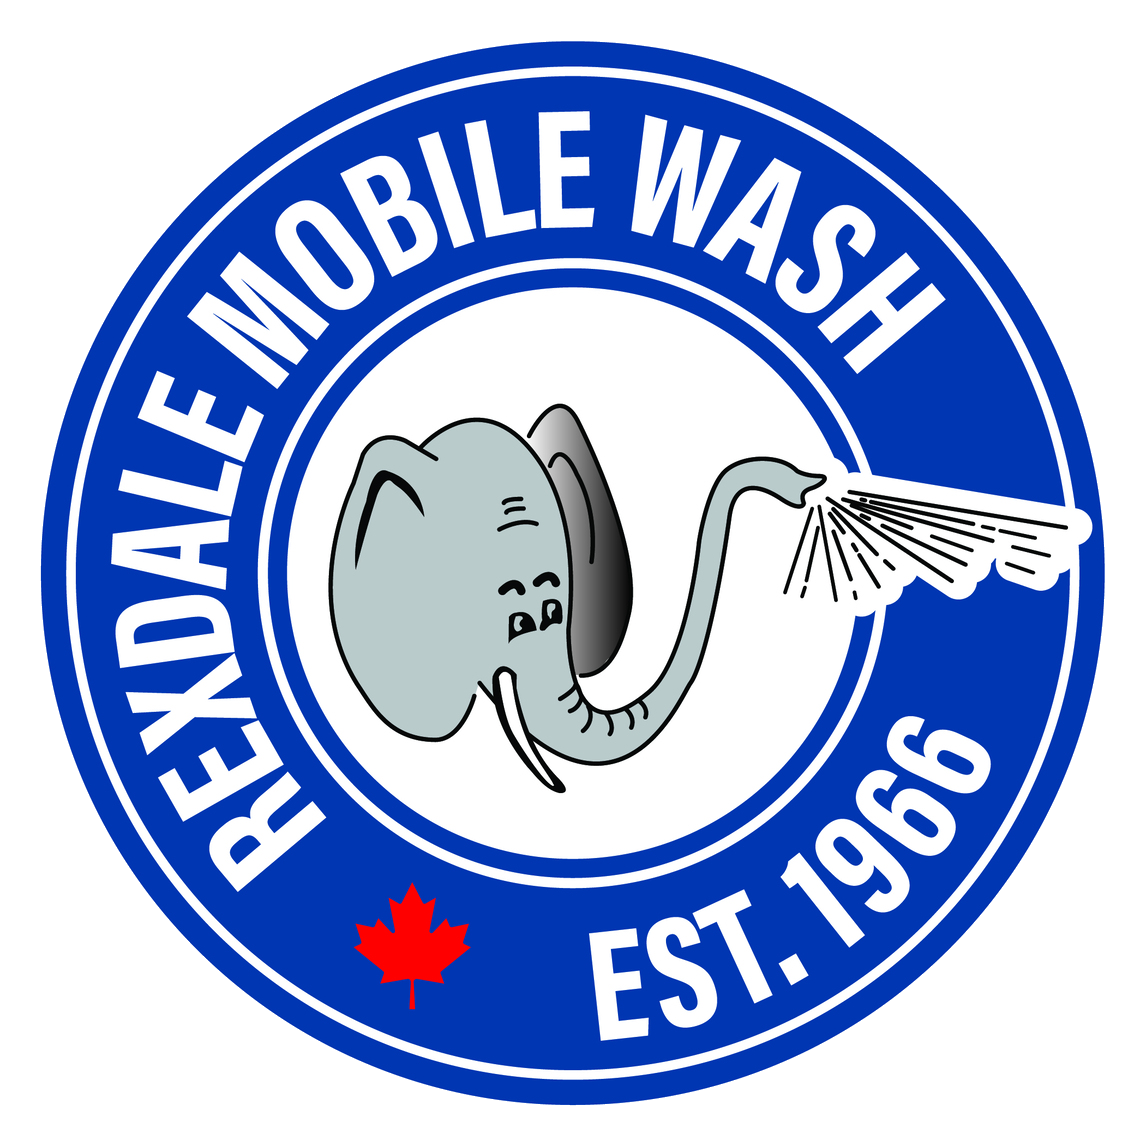 REXDALE MOBILE WASH